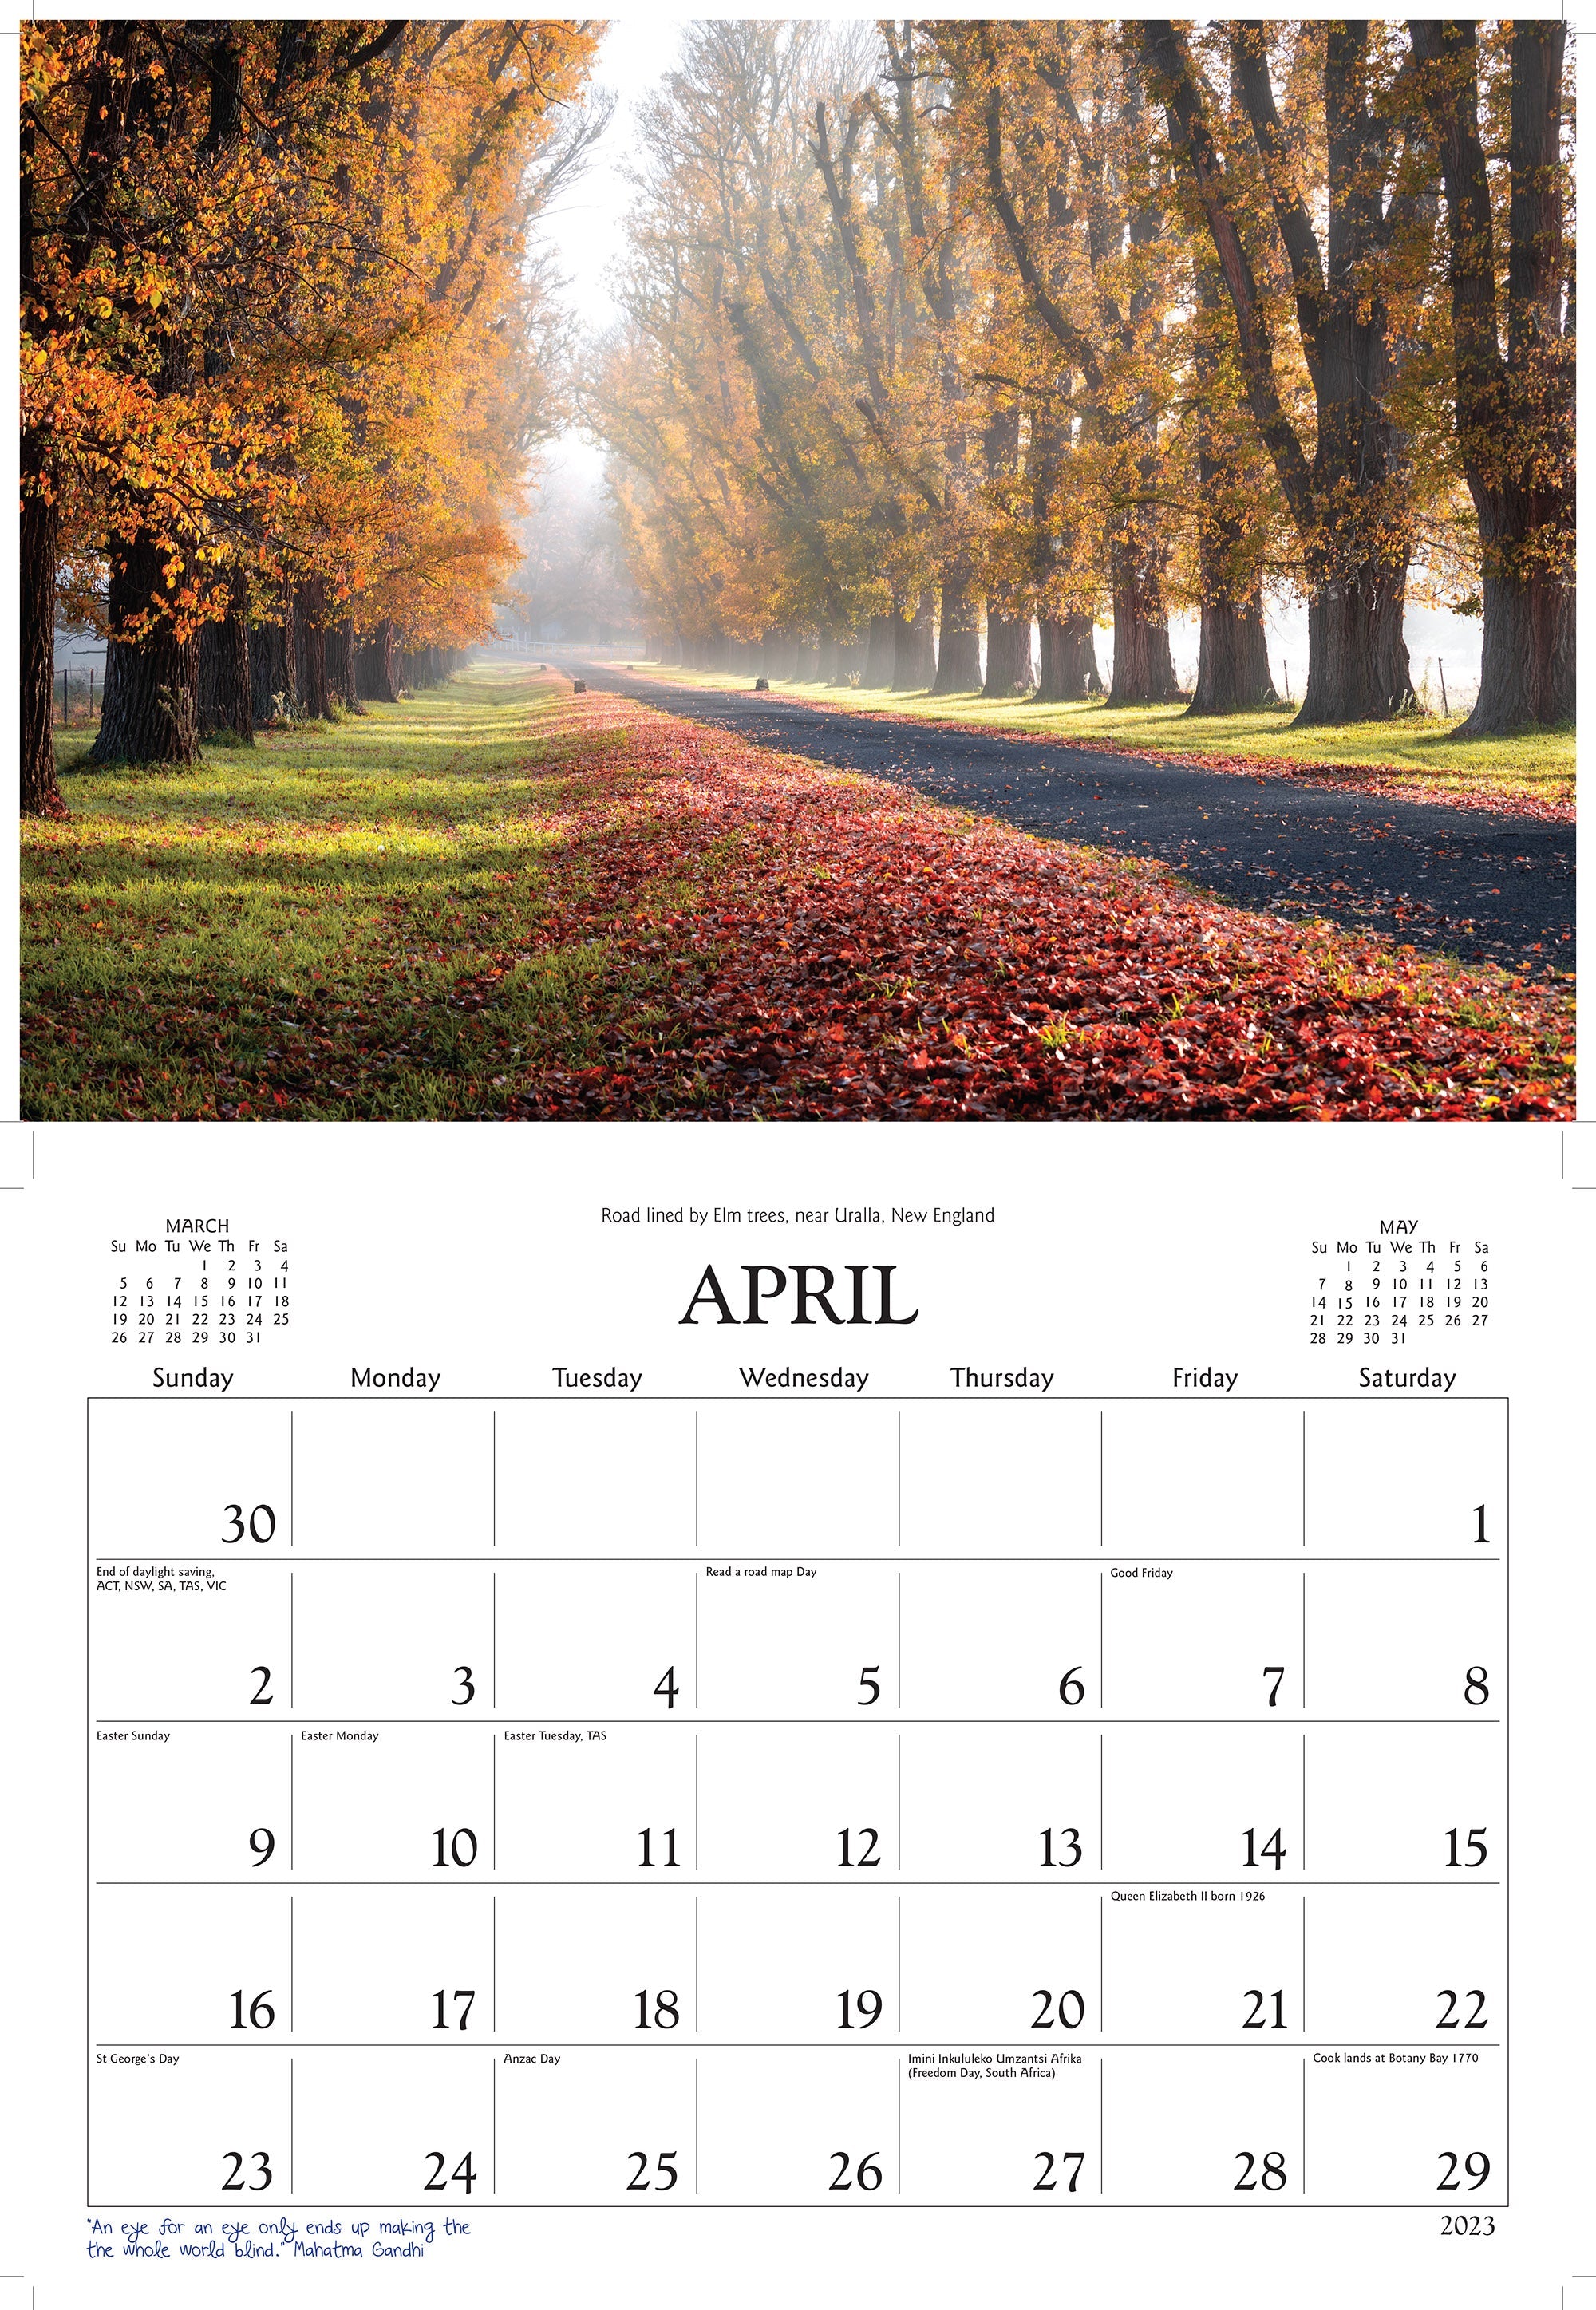 2023 Trees in Australia by David Messent - Horizontal Wall Calendar